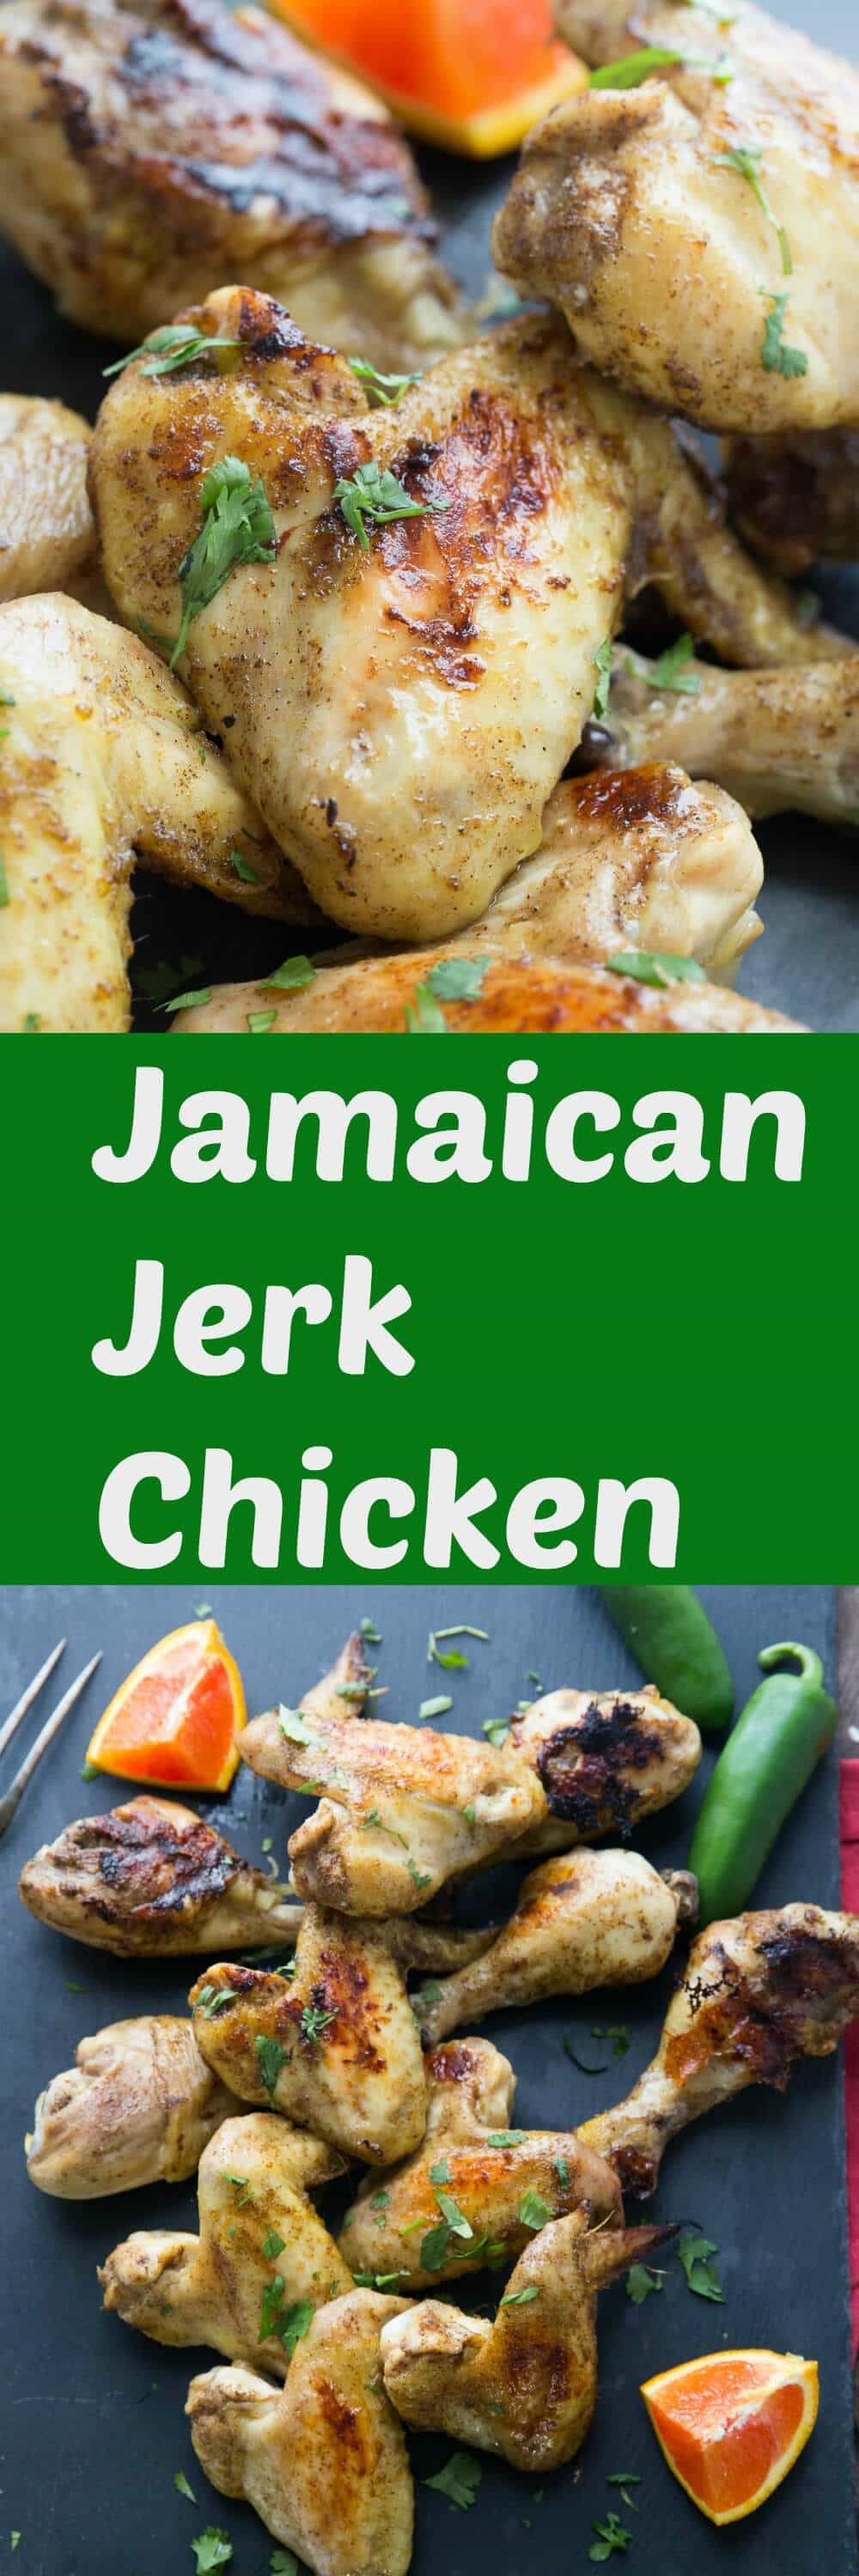 Jamaican Jerk Chicken Recipe - LemonsforLulu.com